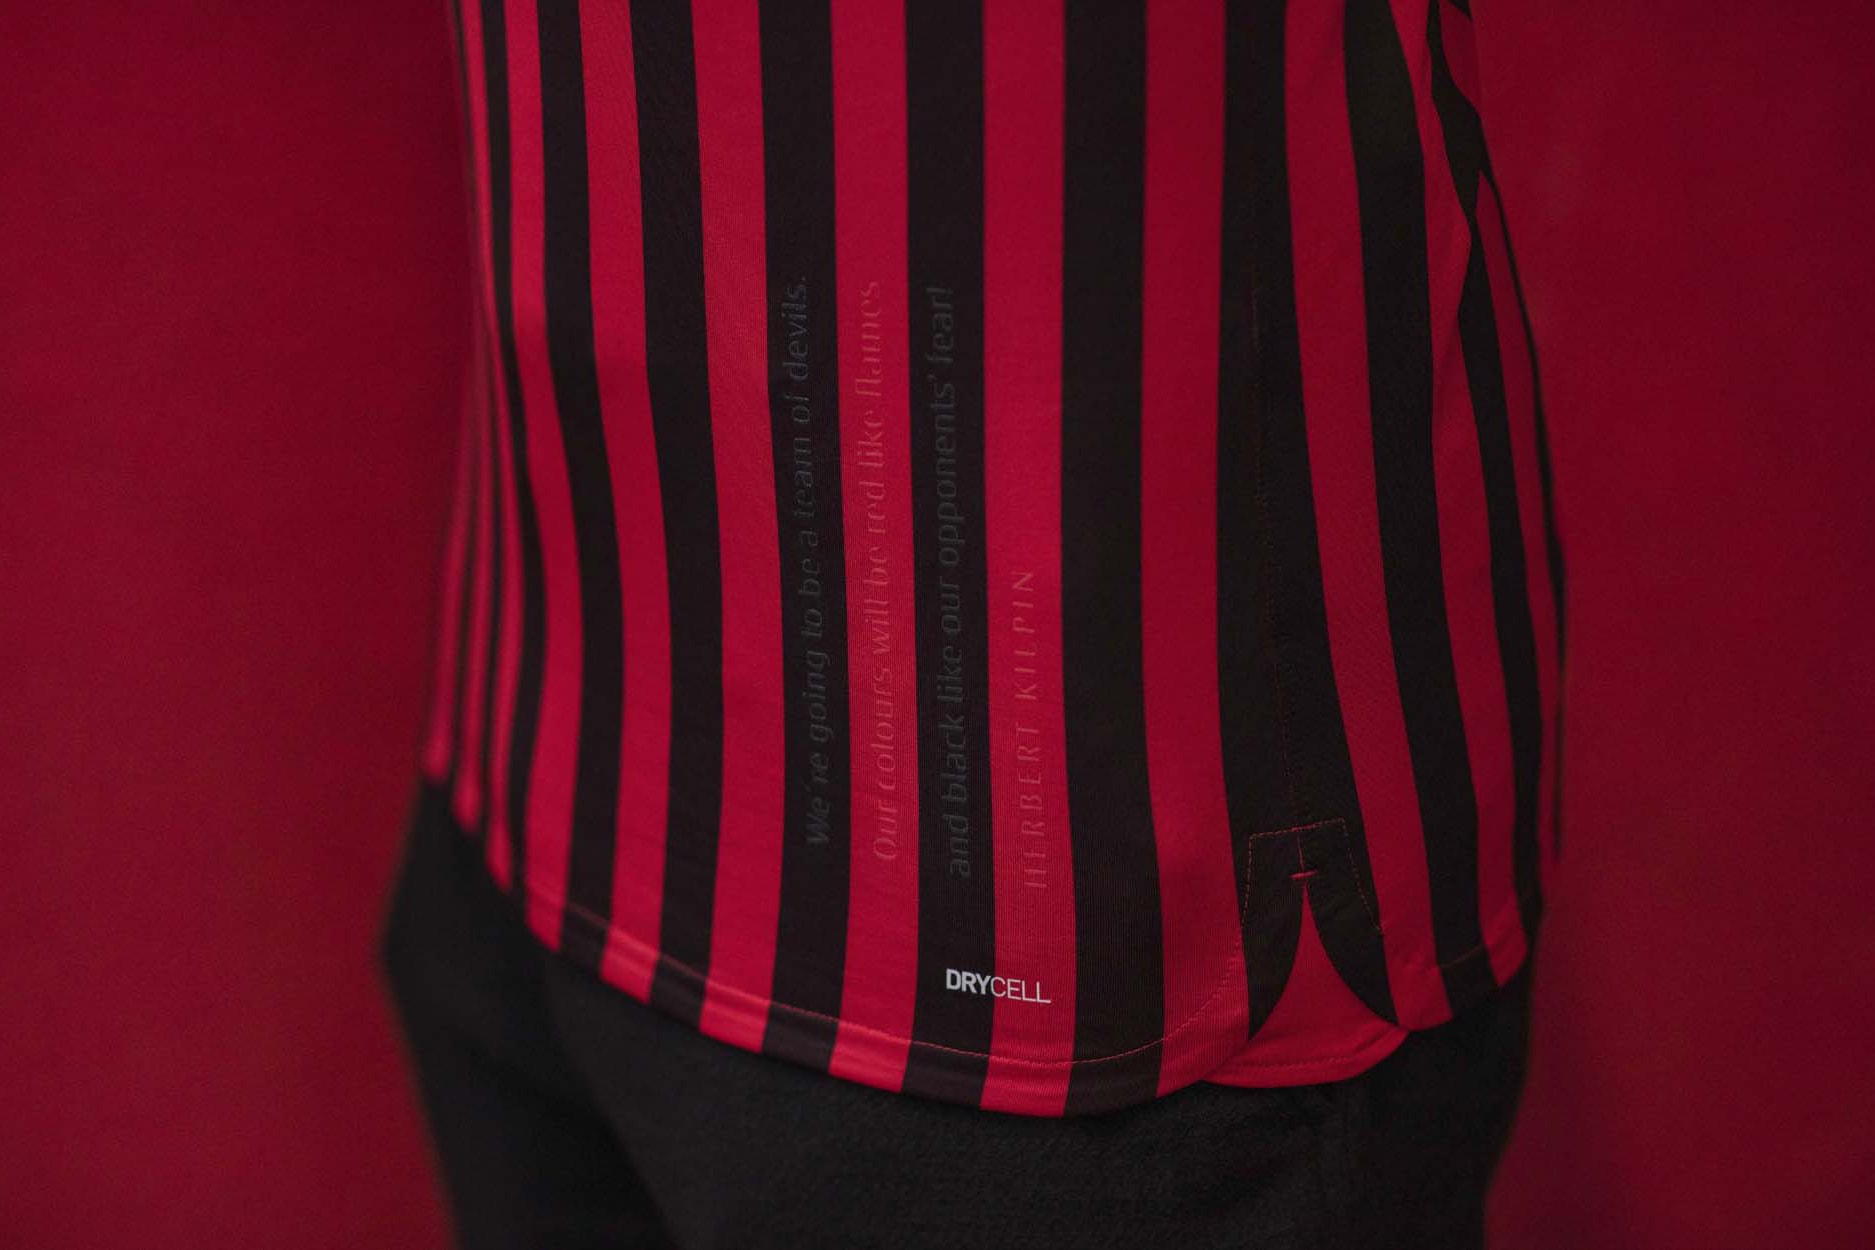 ACミランの創立120周年を記念した限定ユニフォームが発売 AC Milan 120th Anniversary PUMA Kit soccer football jerseys black red gold track jacket football devil logo Herbert Kilpin gold black red stripes limited edition Suso 